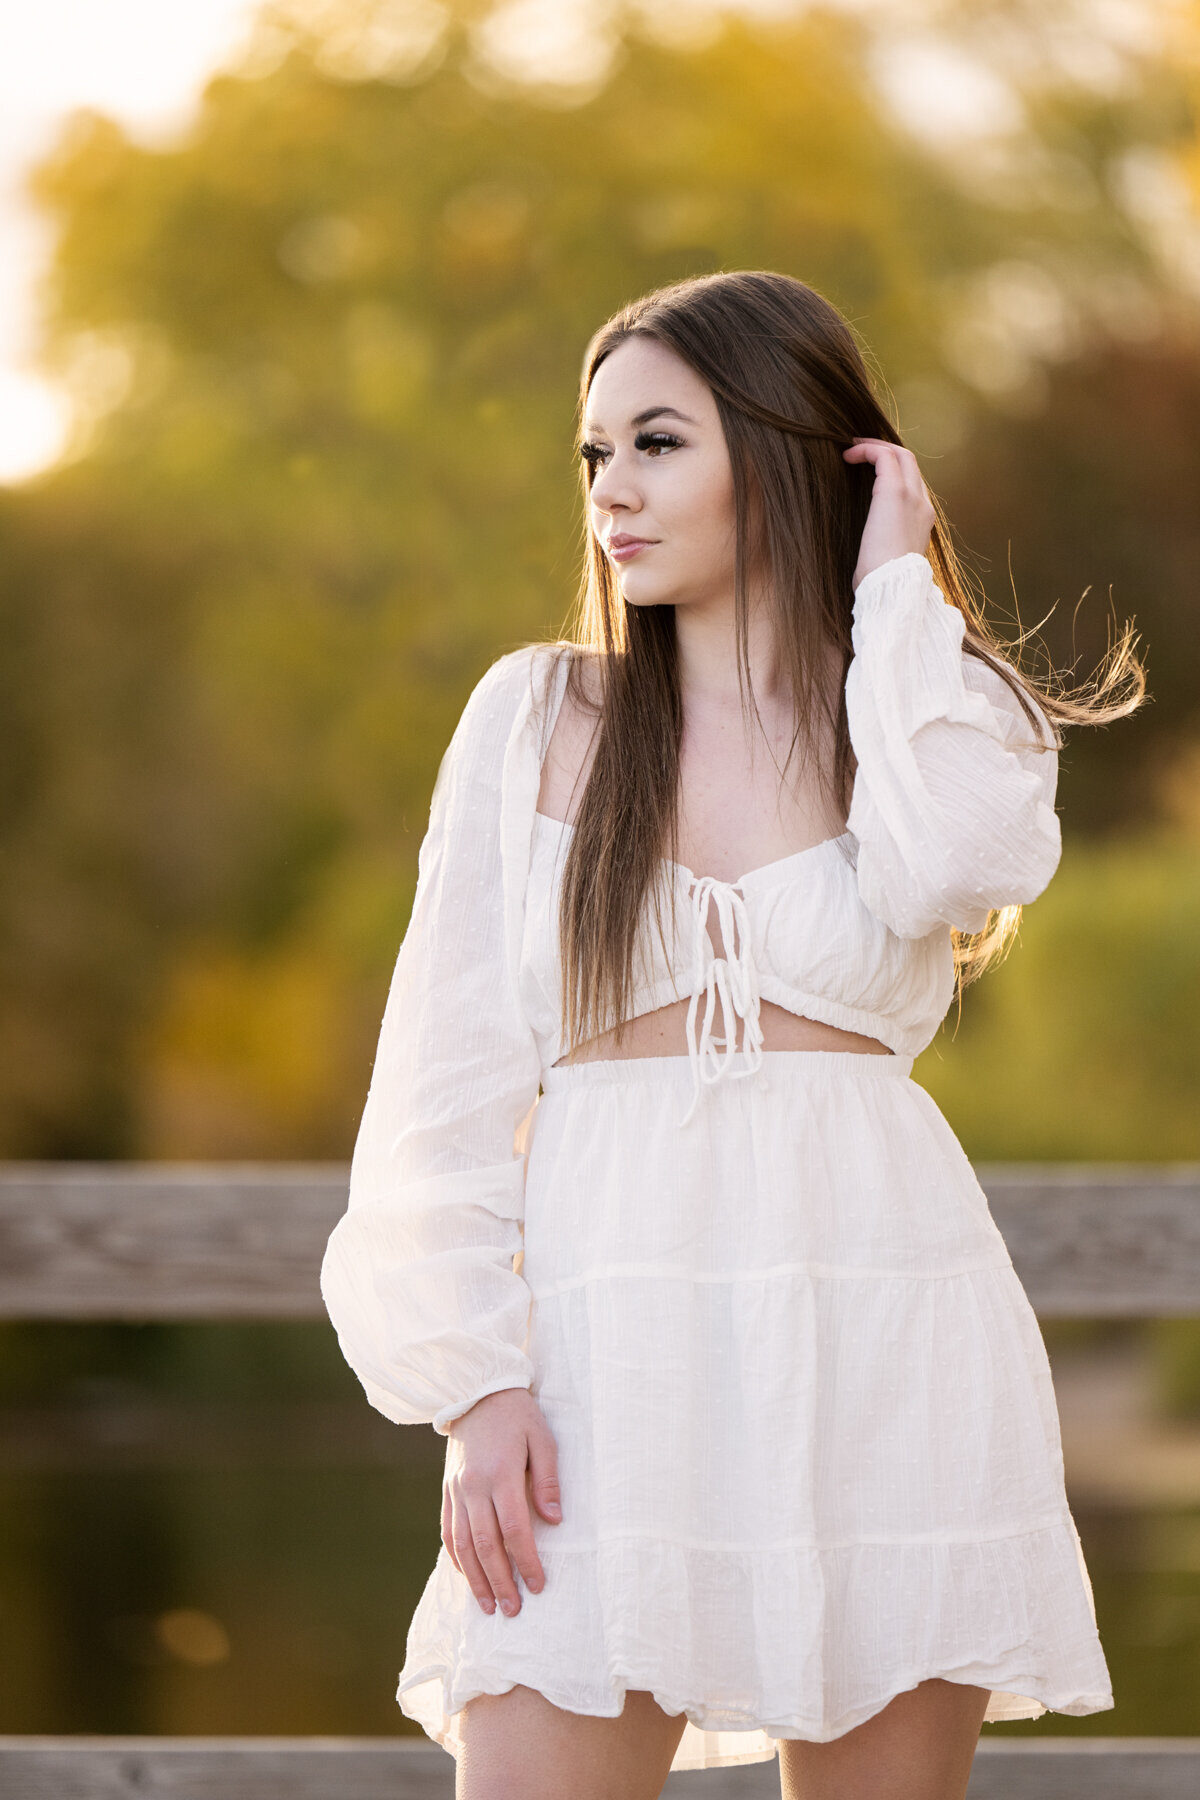 Austin Minnesota girl in white dress standing on a dock at sunset for senior pictures